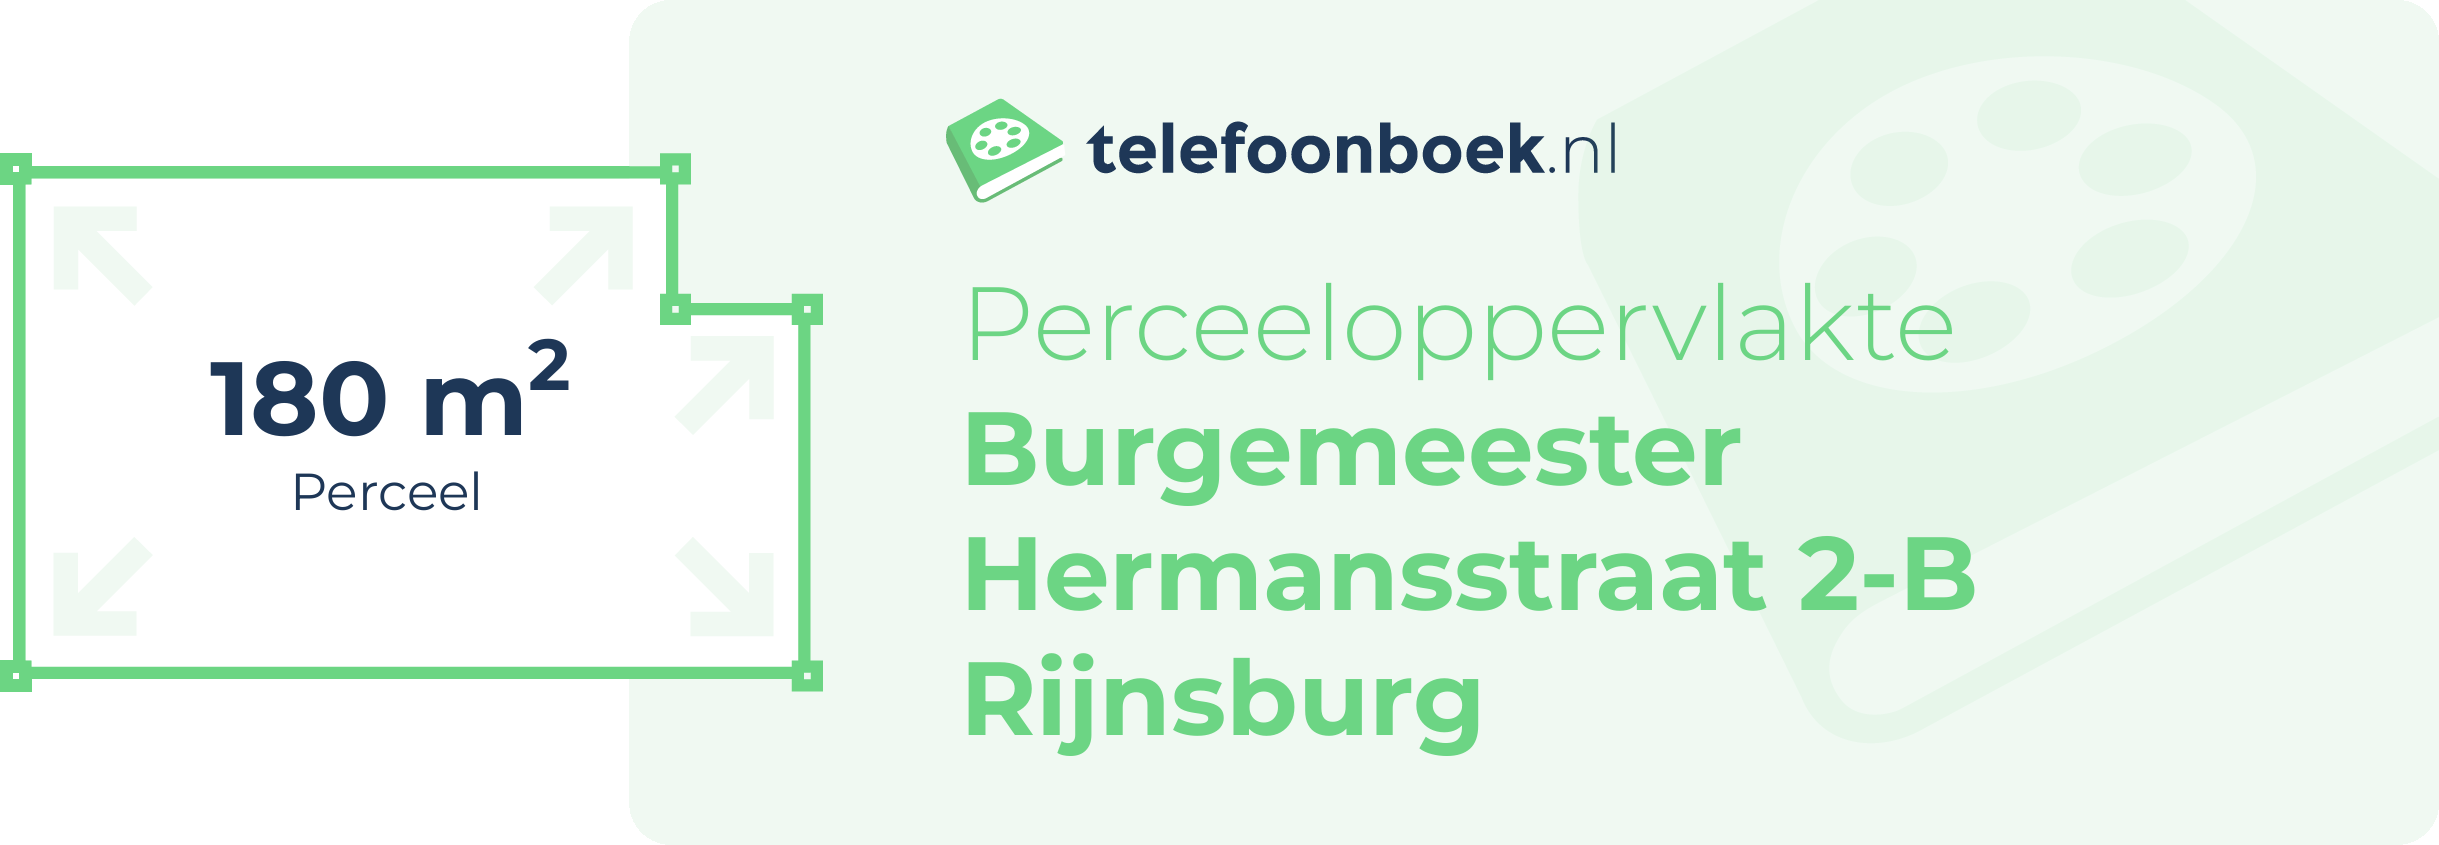 Perceeloppervlakte Burgemeester Hermansstraat 2-B Rijnsburg